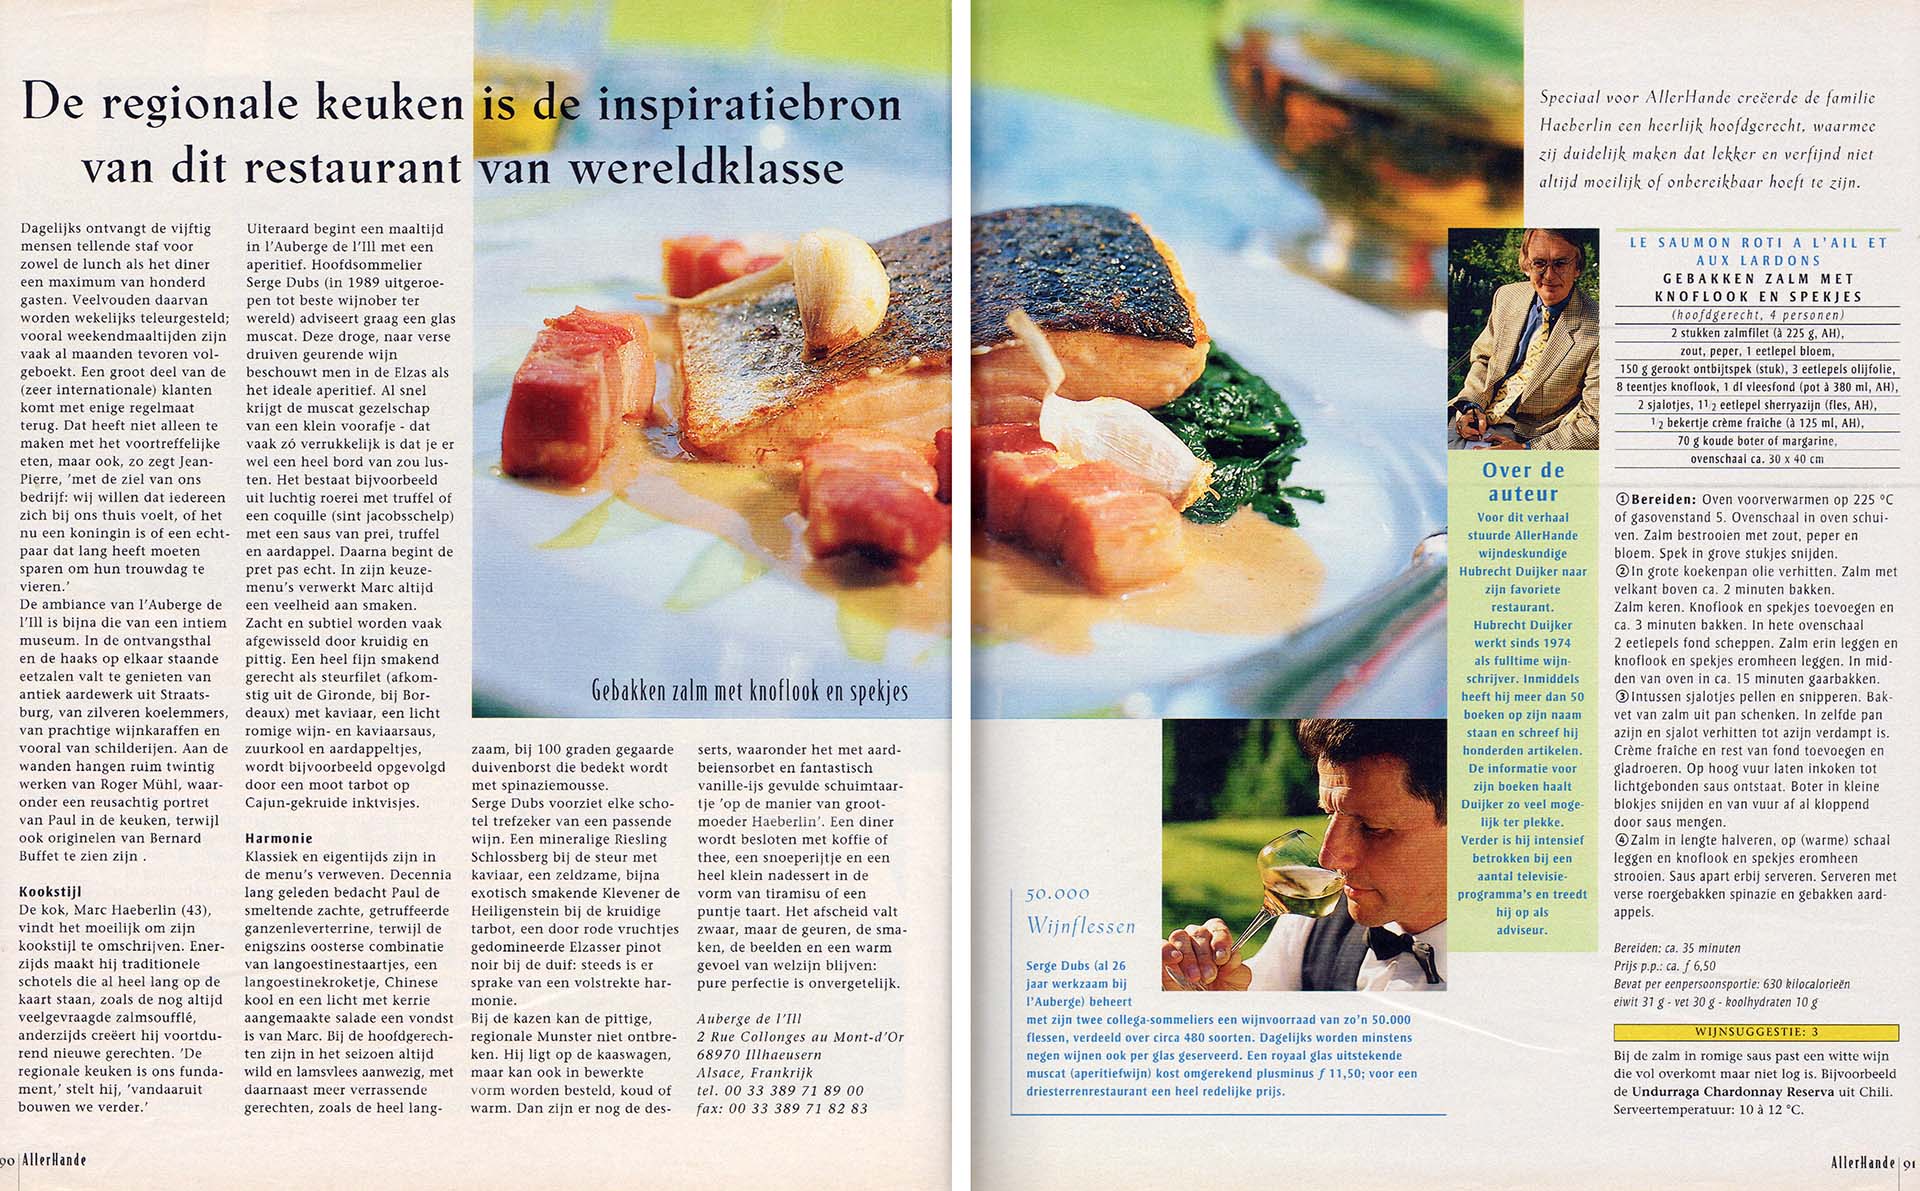 Publication in AllerHande about the then three-star restaurant in Alsace.